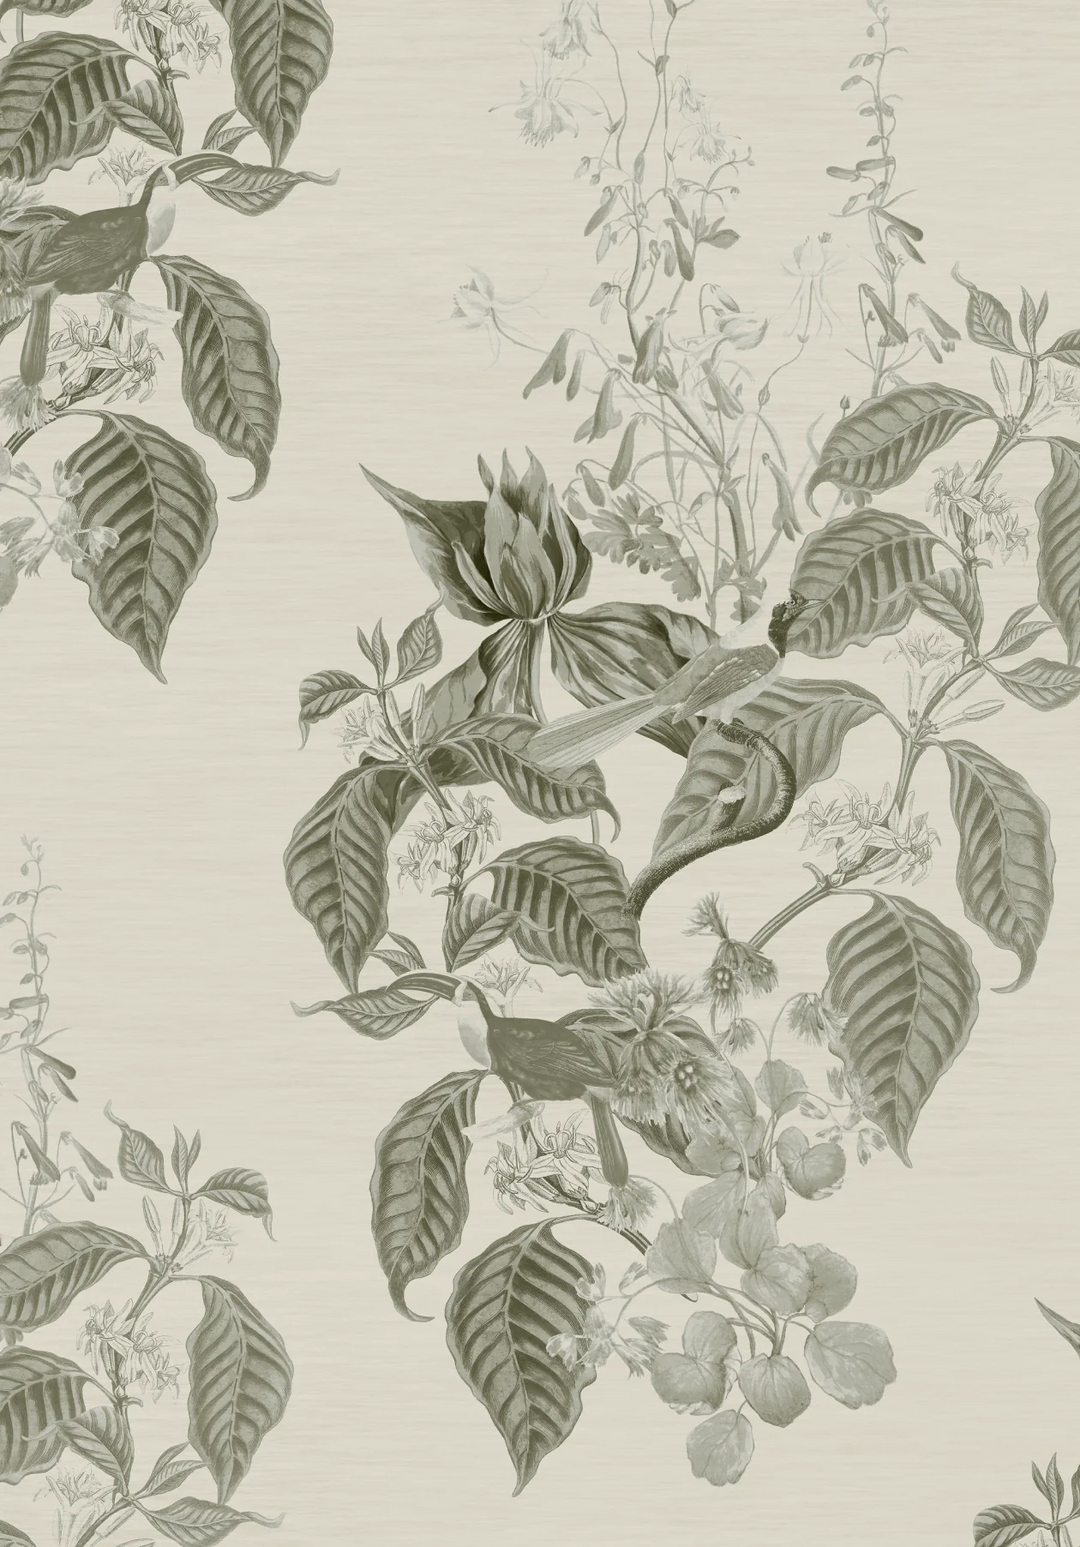 Deus-ex-gardenia-Aviary-French-Gray-DG134-AI-FRE-S-french-tiole-design-jasmine-trailing-garden-birds-hand-illustrated-wild-meadows